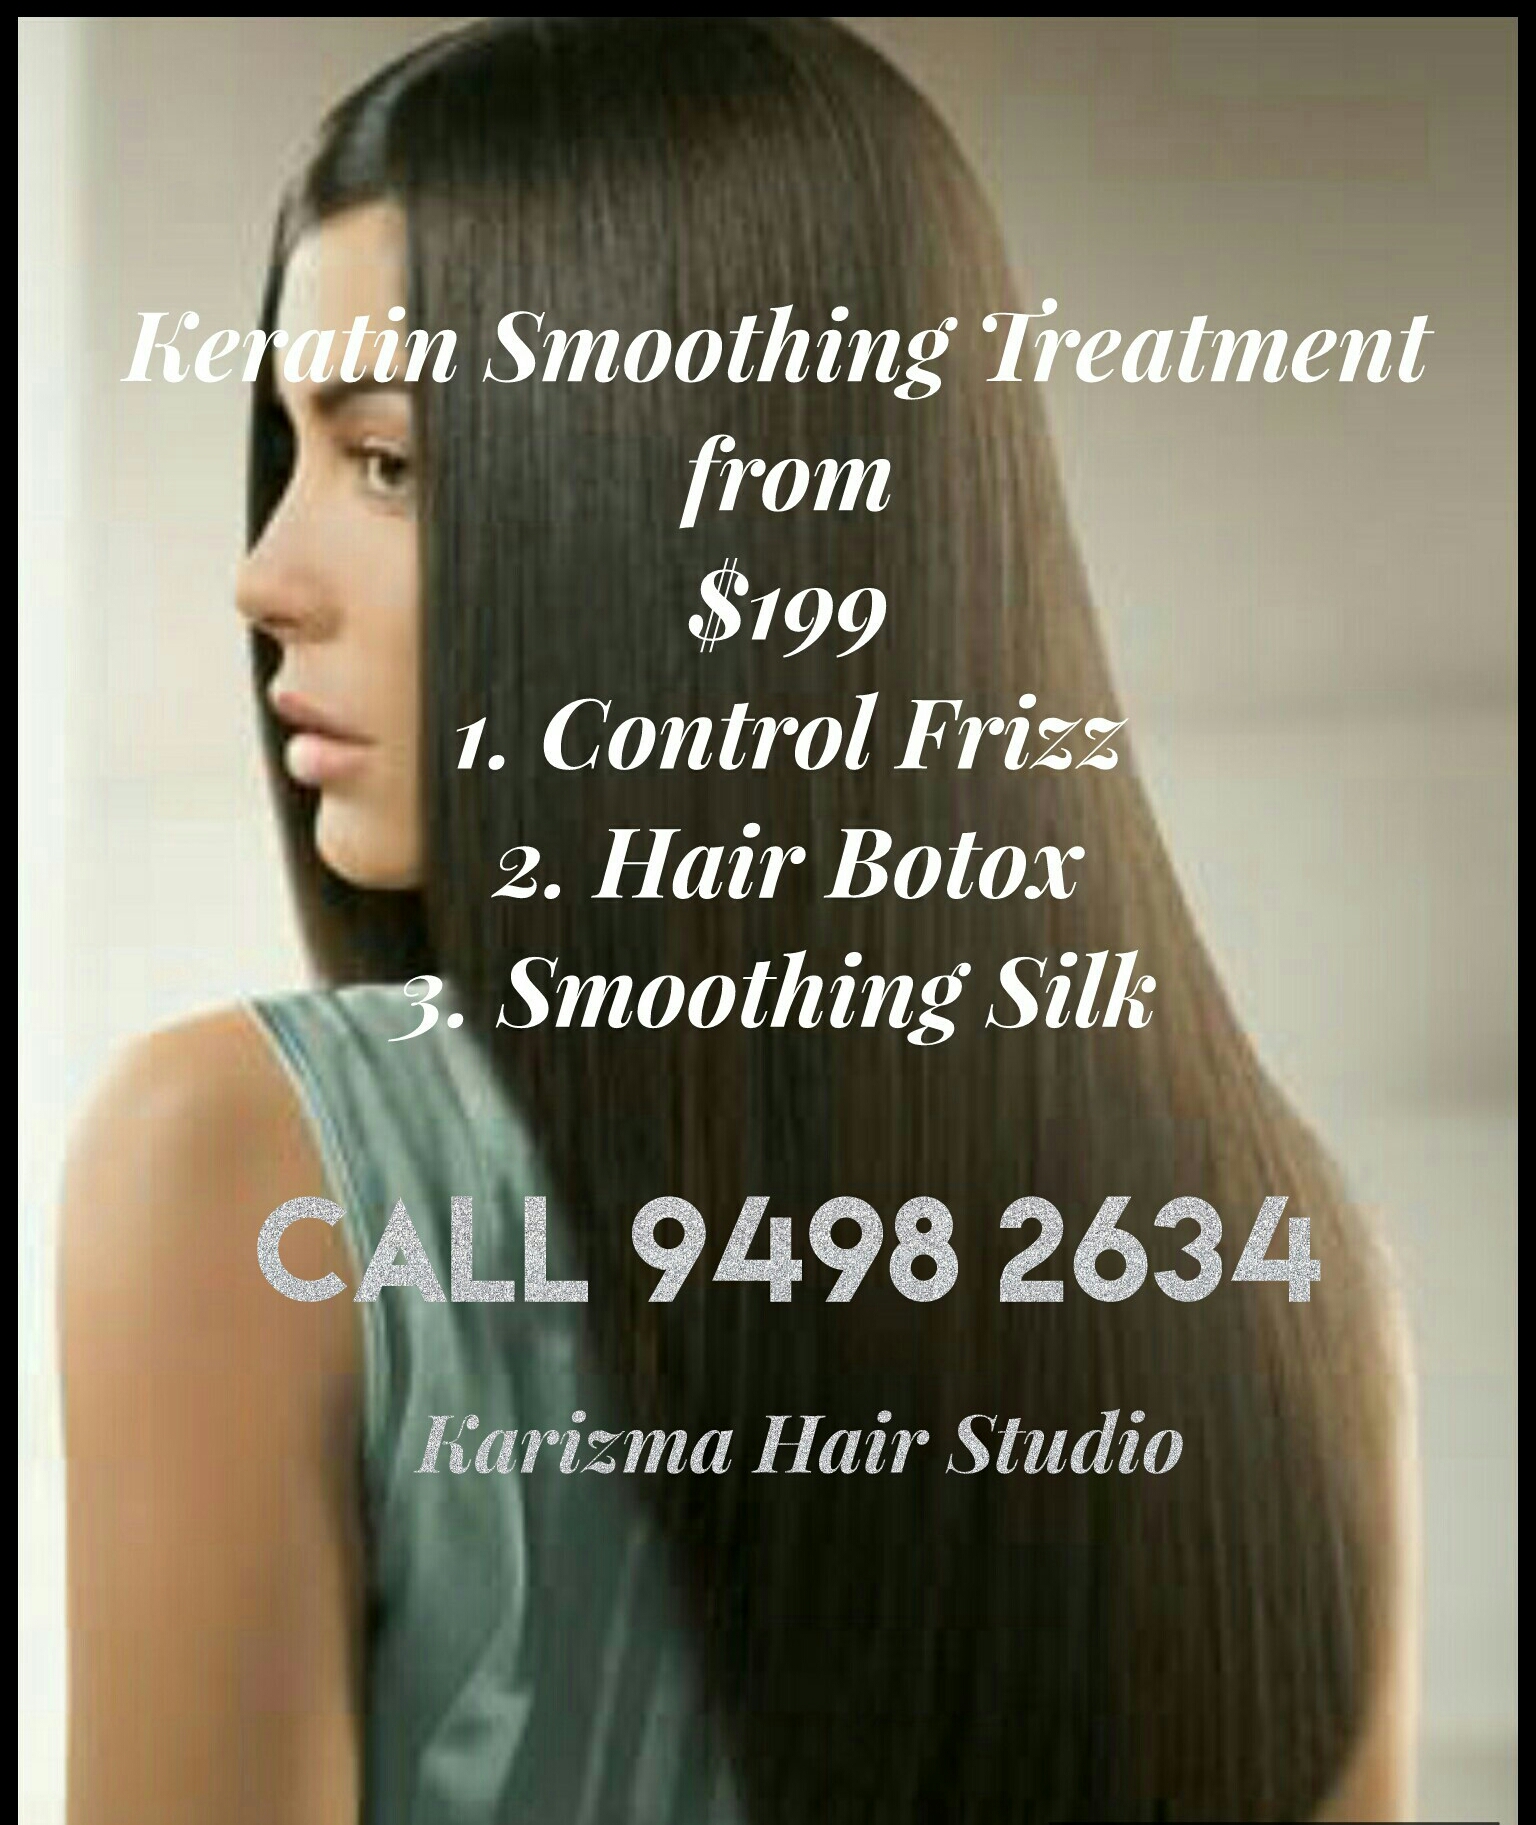 Images Karizma Hair Studio